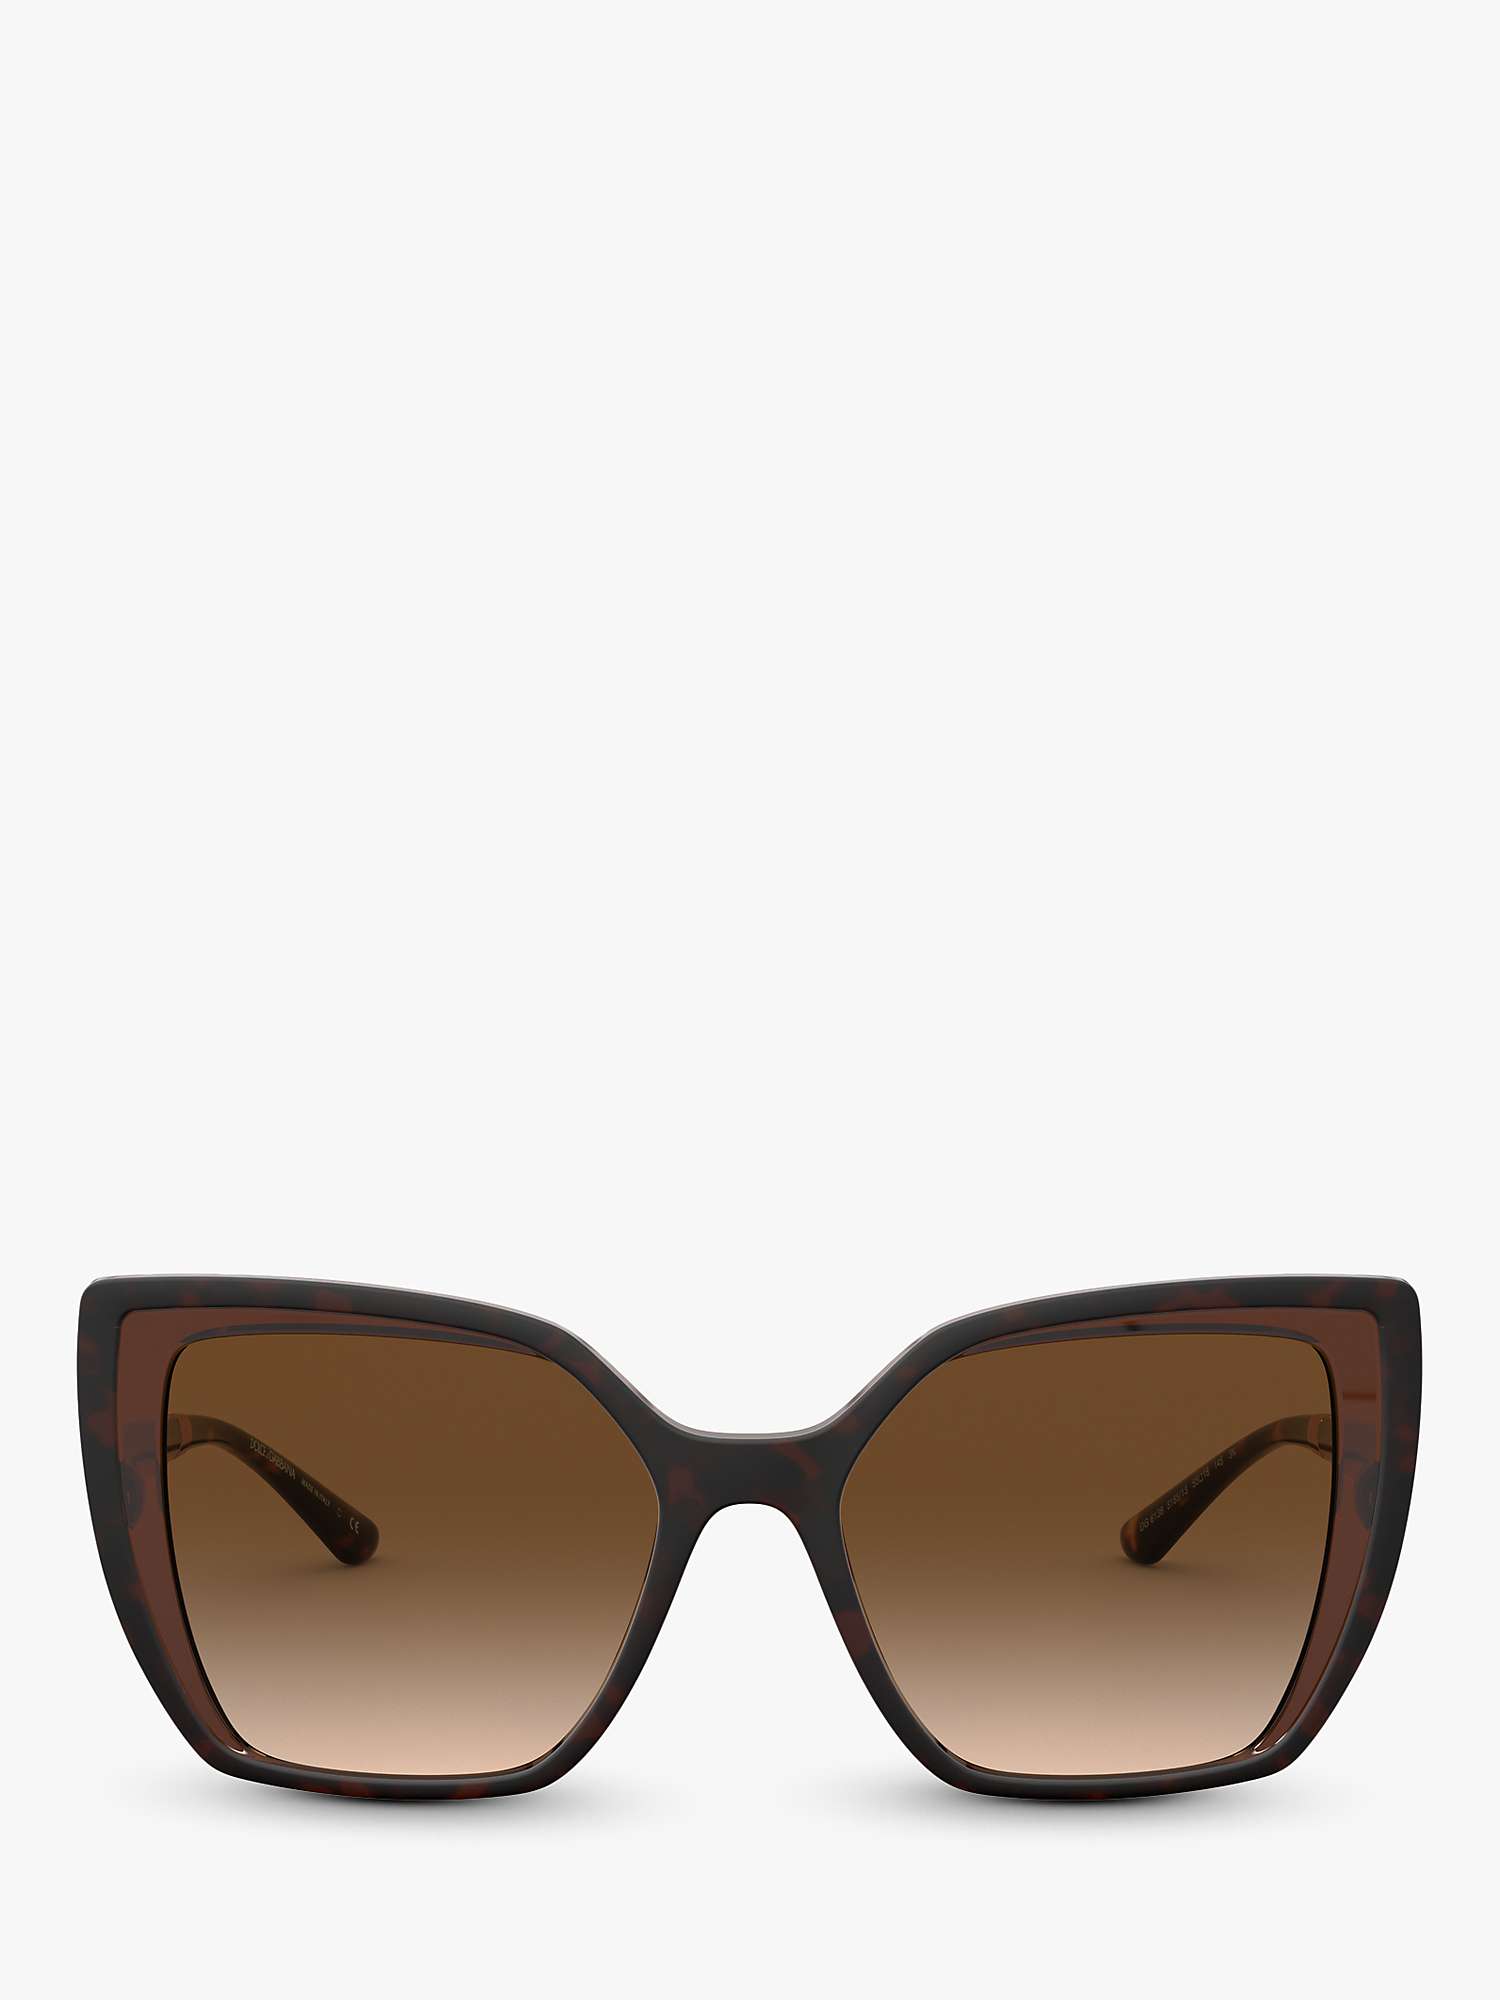 Buy Dolce & Gabbana DG6138 Women's Butterfly Sunglasses, Brown/Brown Gradient Online at johnlewis.com